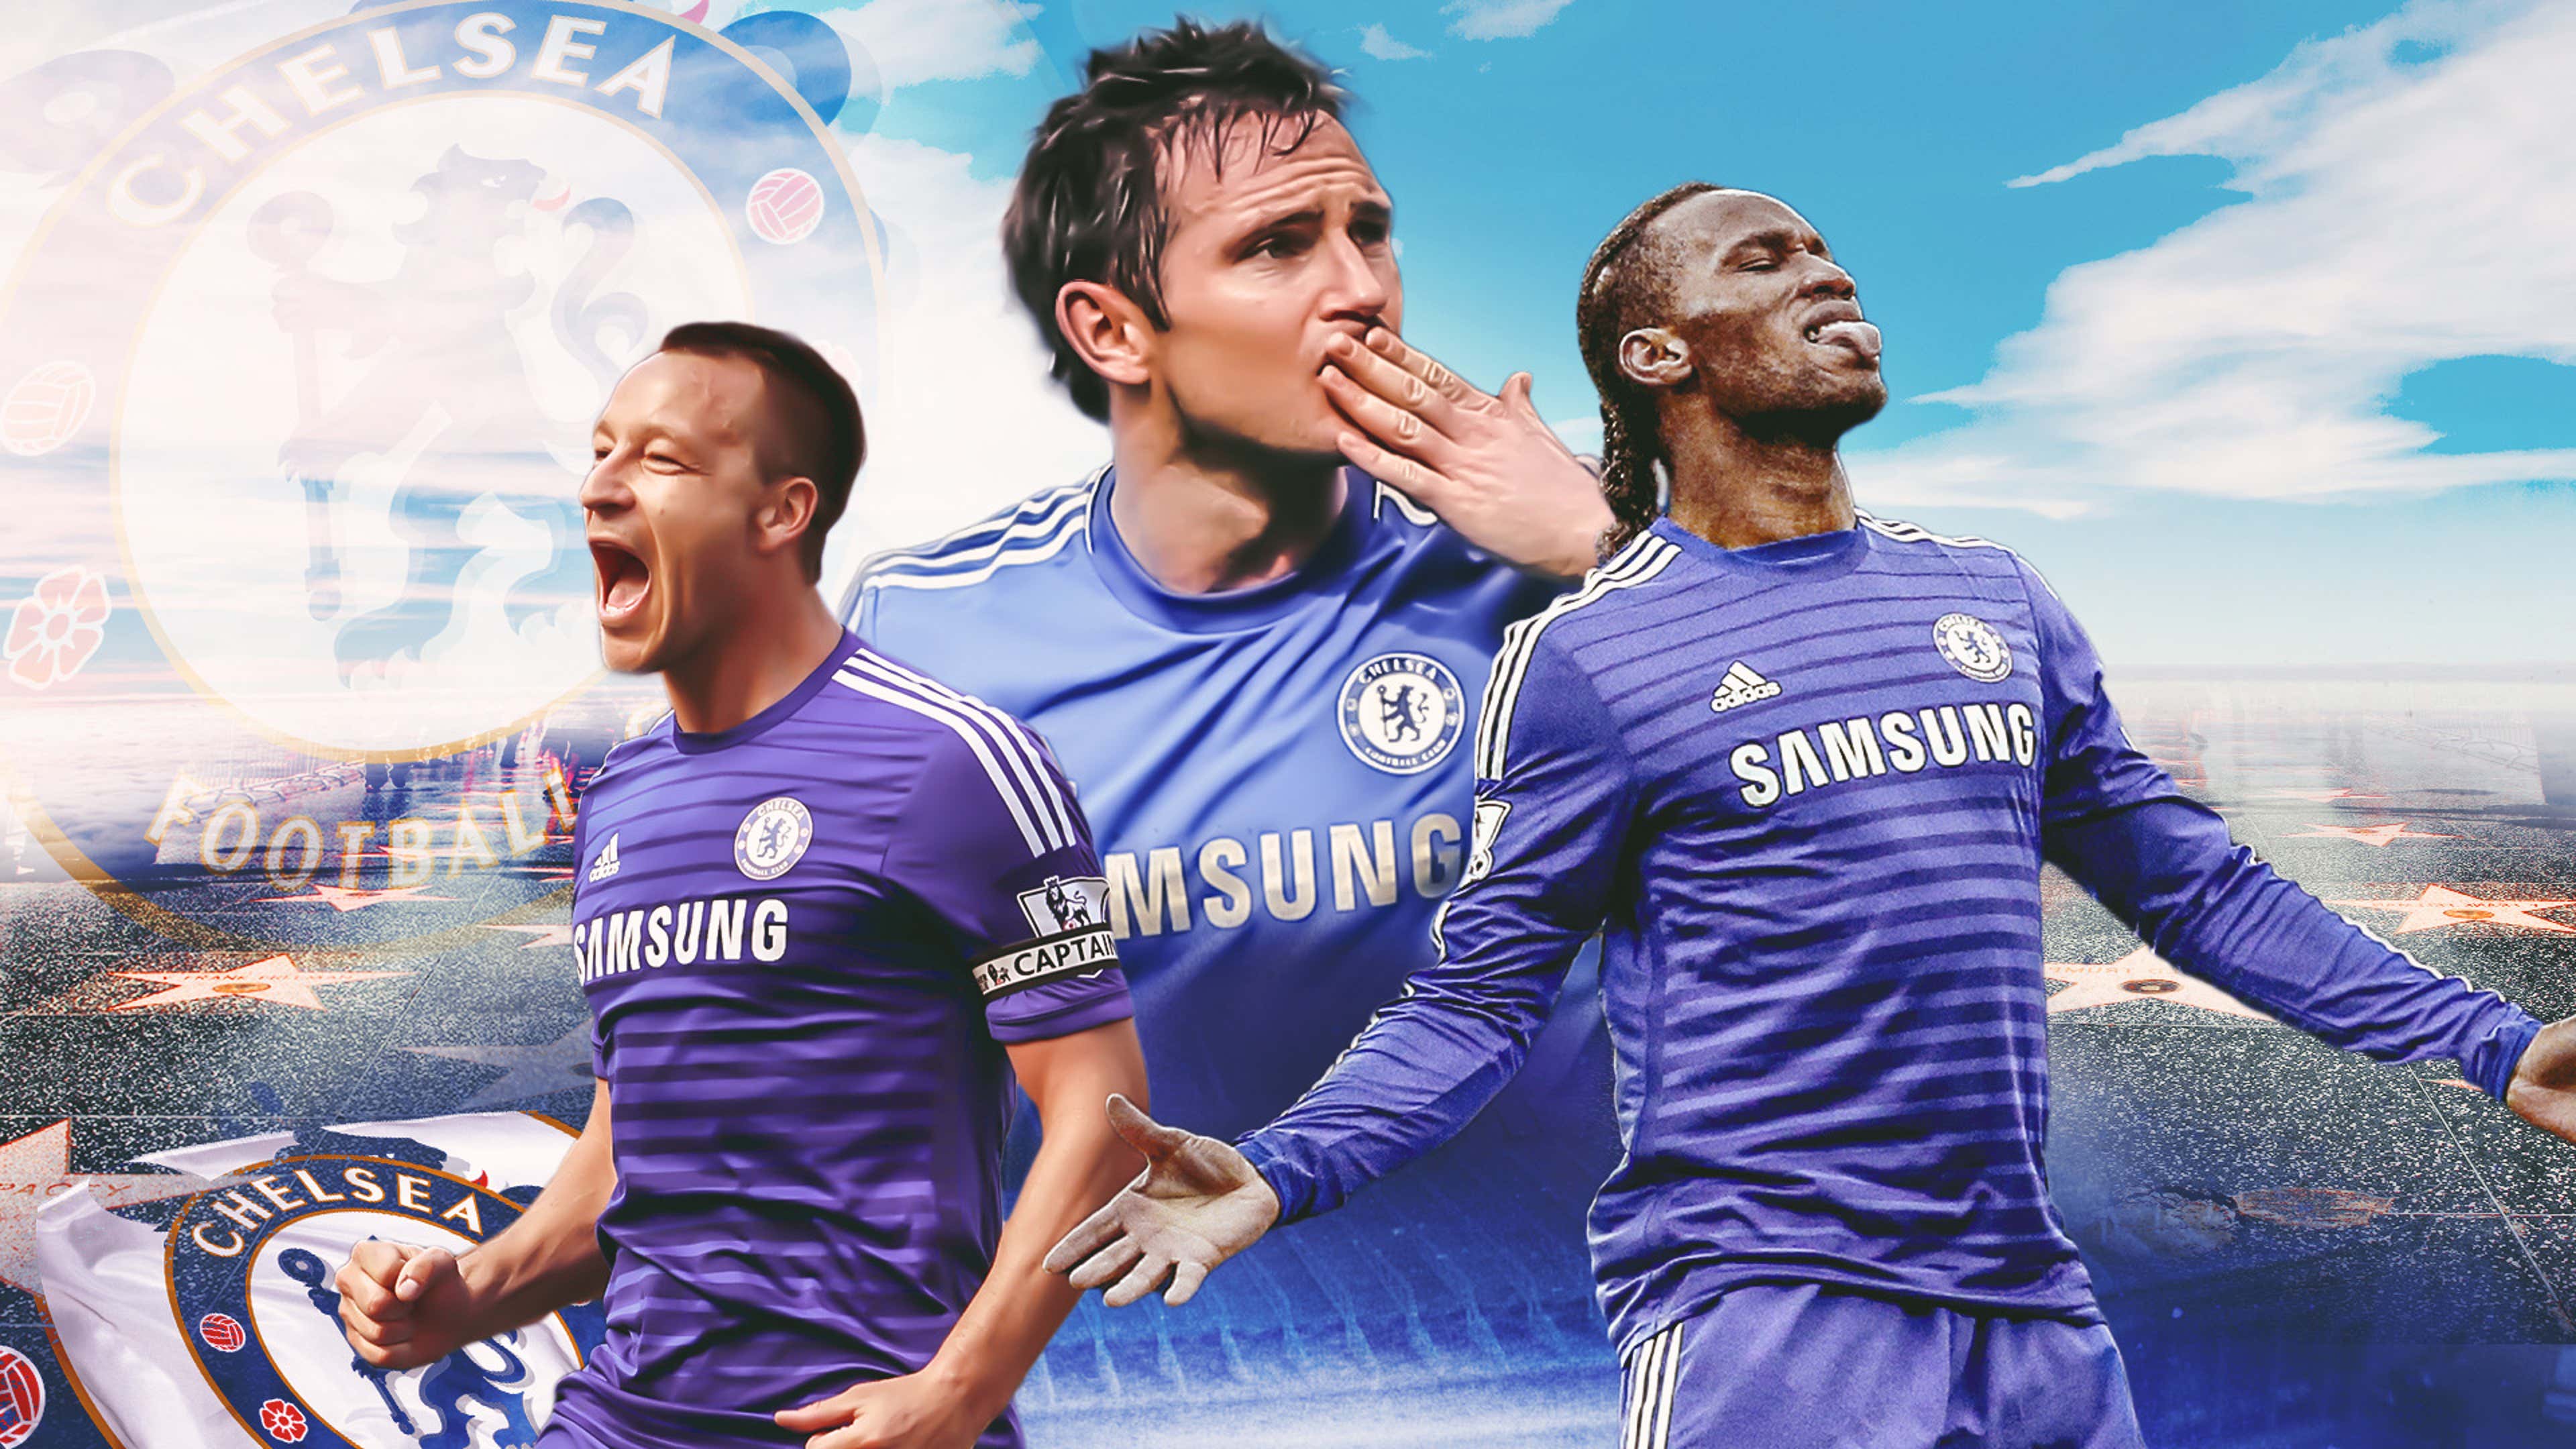 Chelsea Pride of London, football team, chelsea logo, chelsea london HD  wallpaper